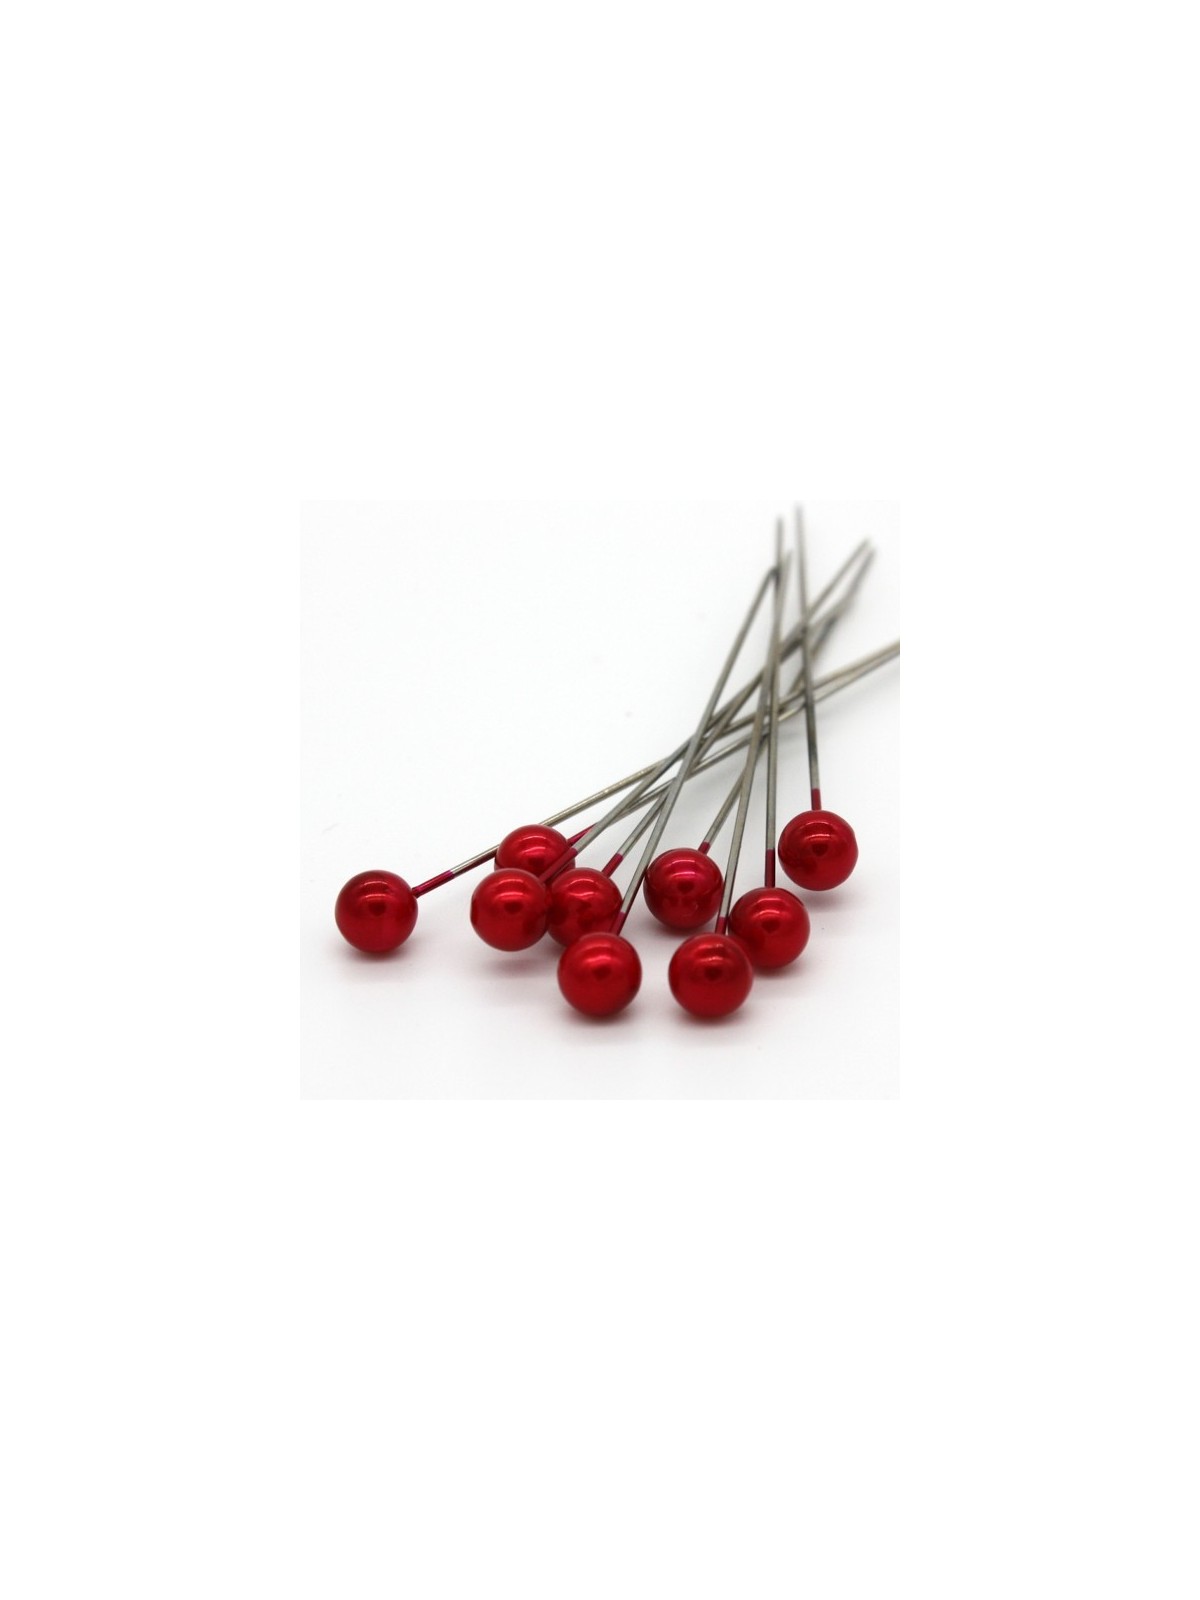 Dekorative pins - rot Perle - 65mm/9stück